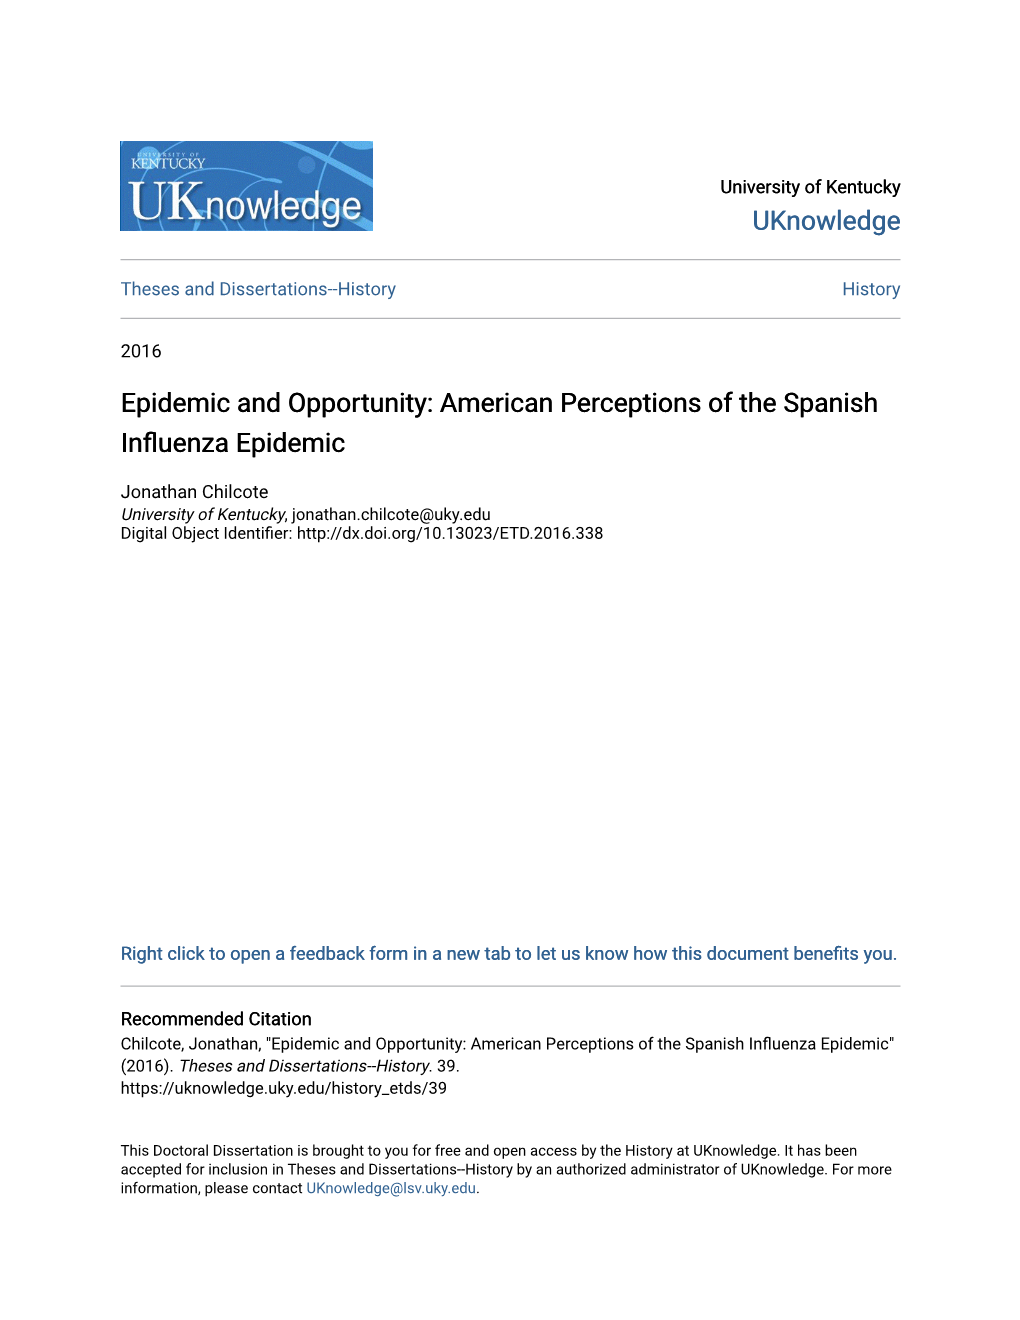 American Perceptions of the Spanish Influenza Epidemic